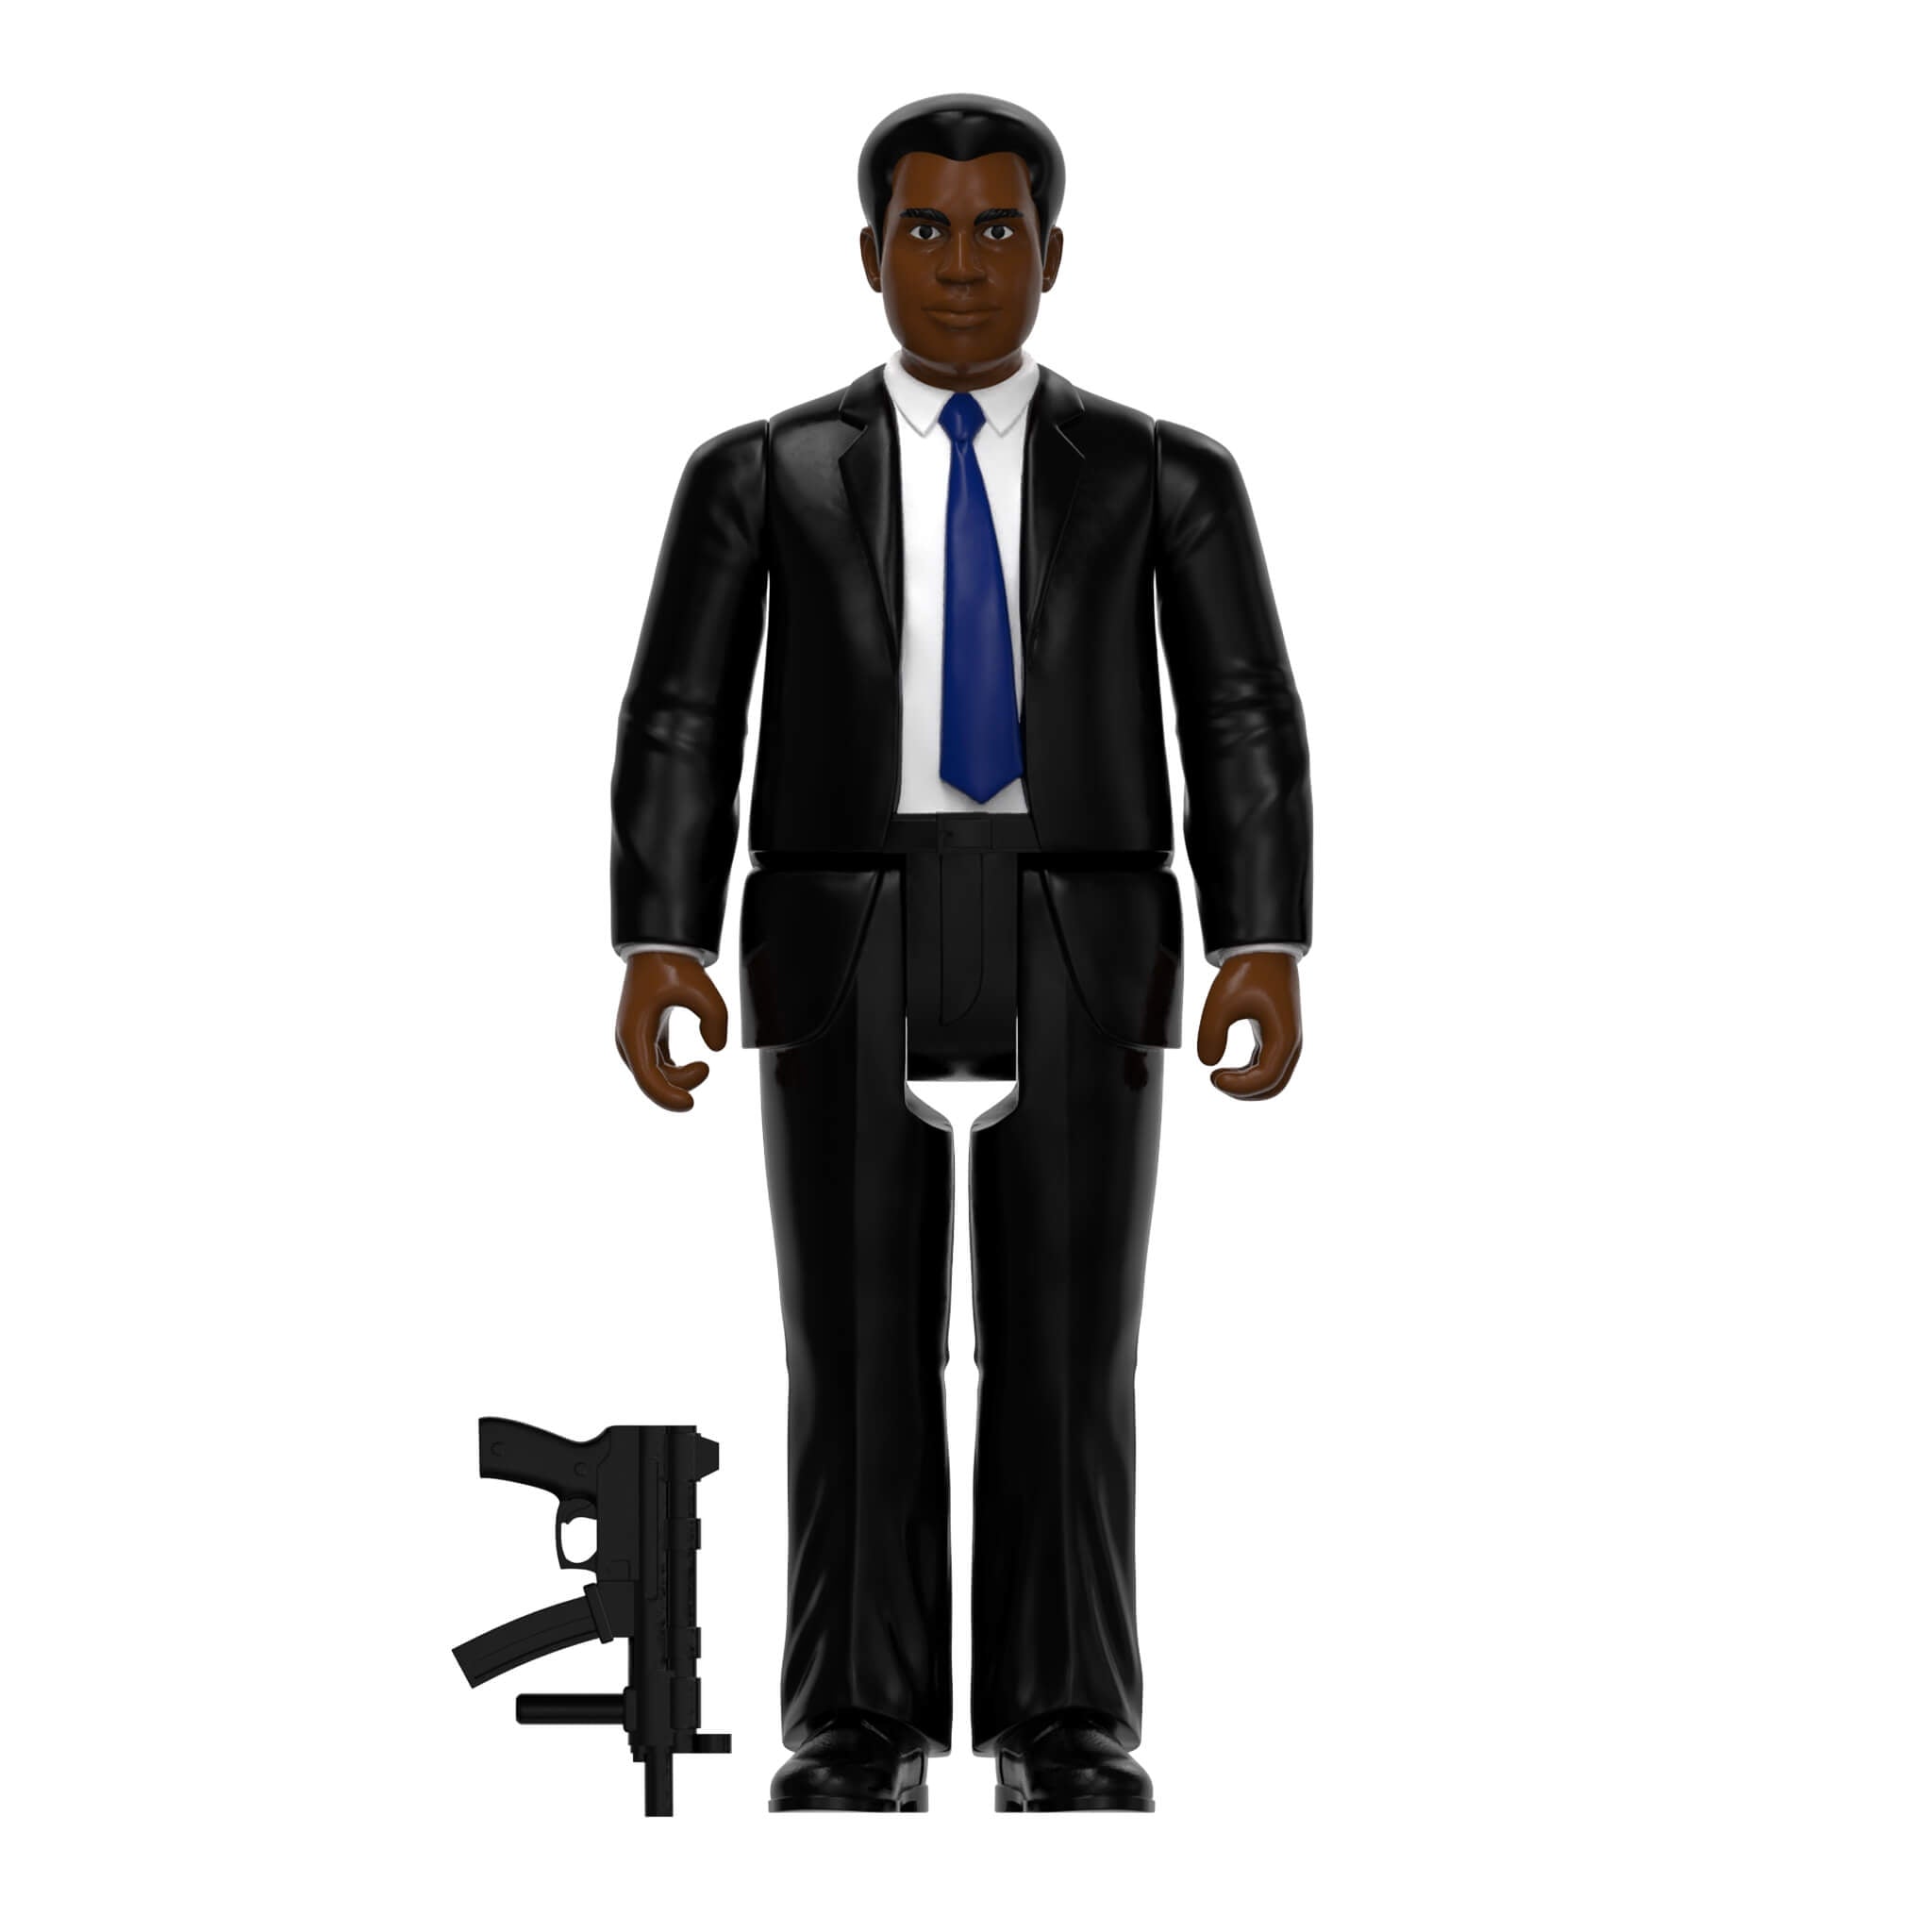 The Office ReAction Figures Wave 1 - Darryl Philbin as President Jackson